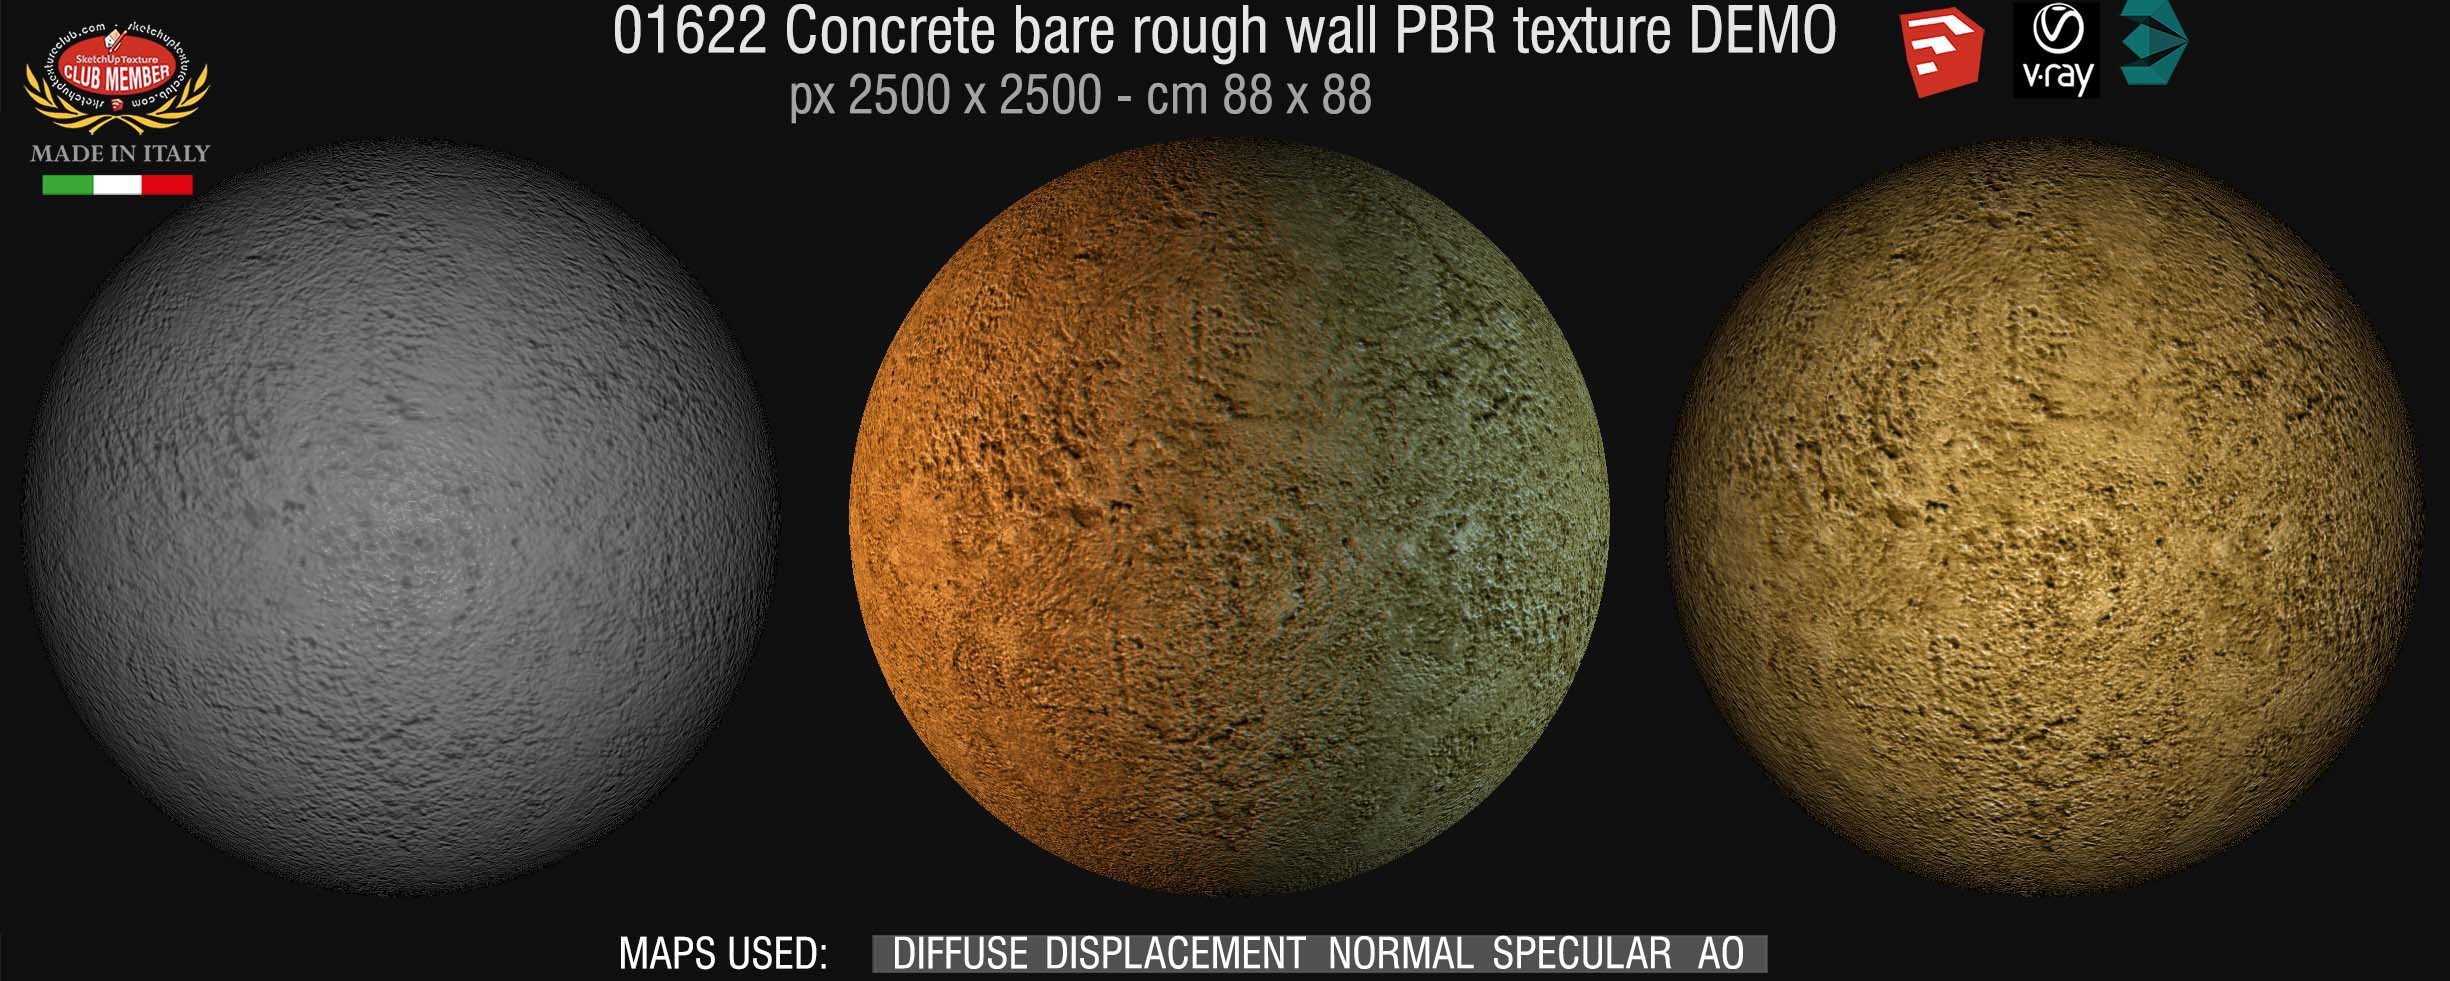 01622 Concrete bare rough wall PBR texture seamless DEMO